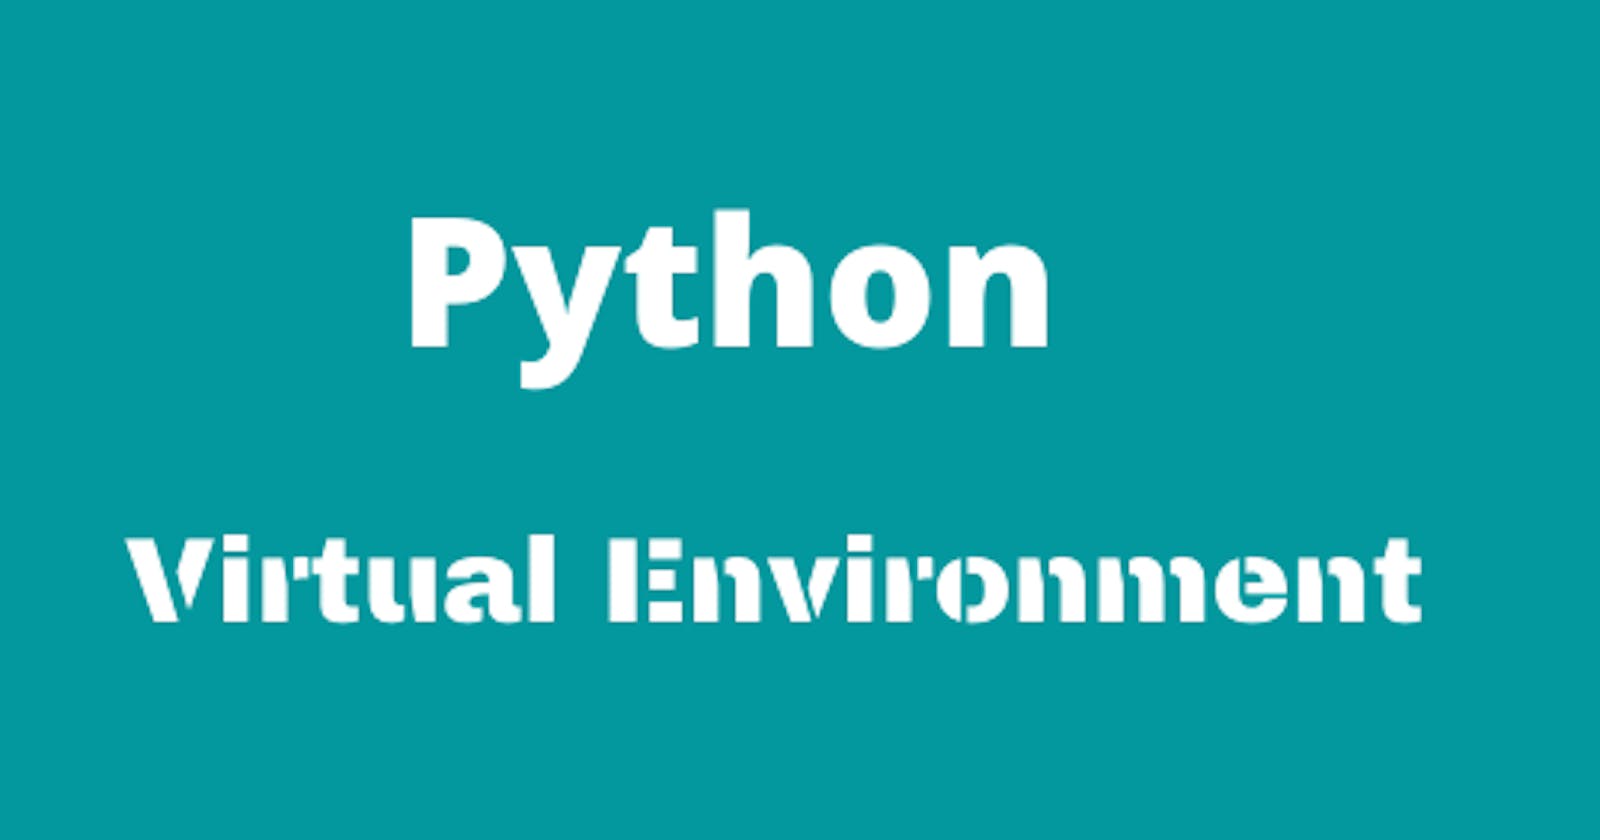 Pipenv vs Virtualenv environment in Python